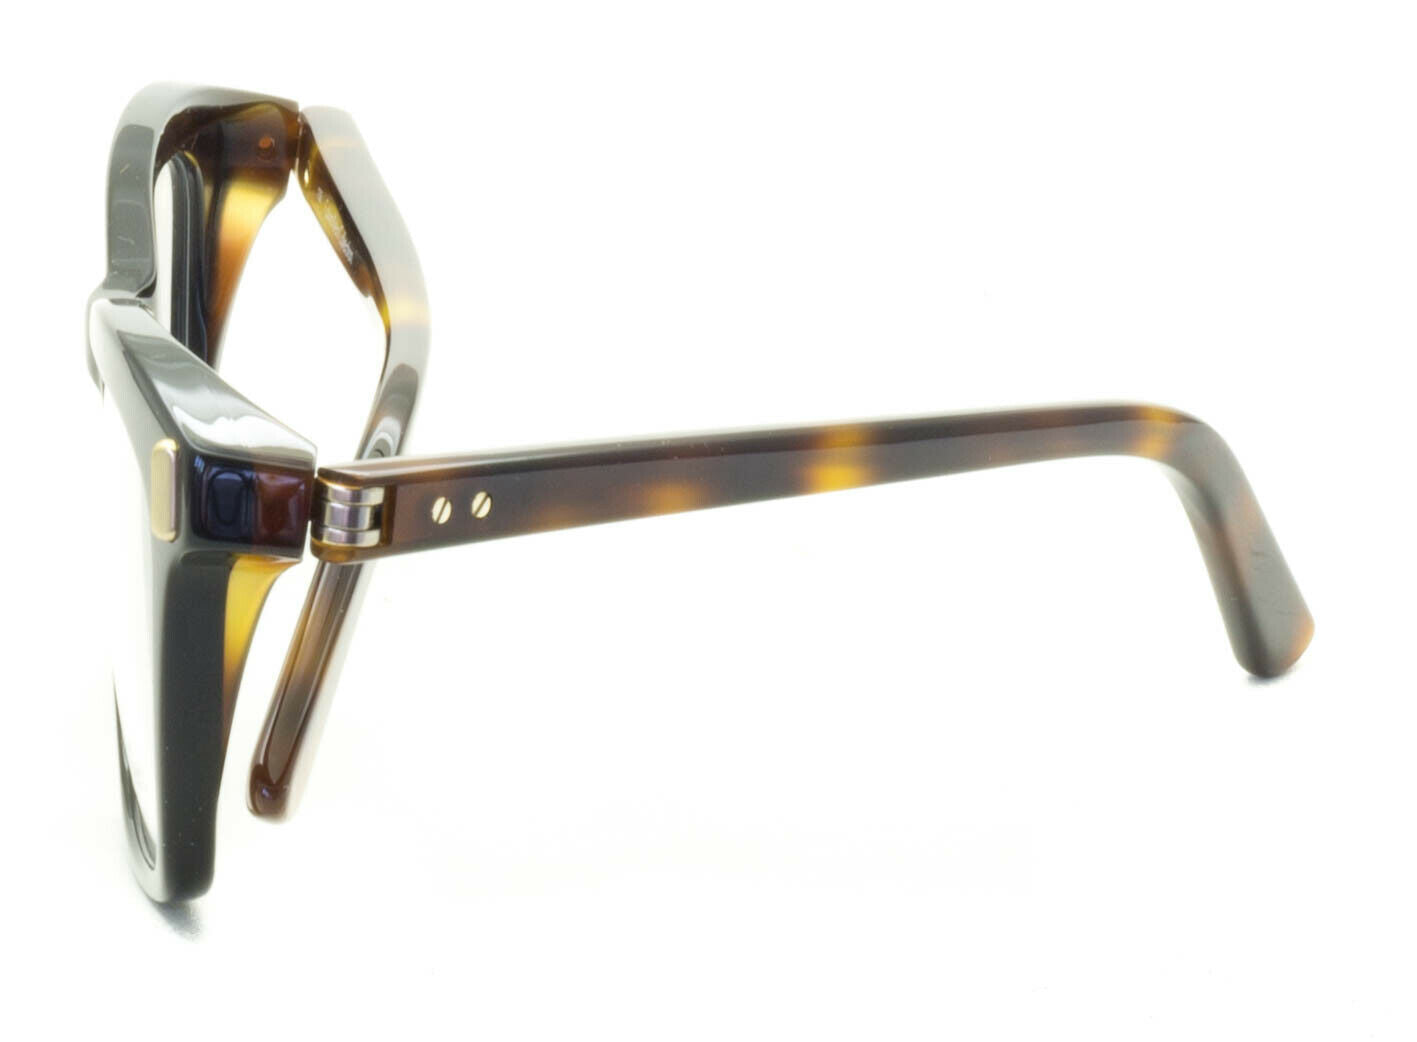 CALVIN KLEIN CK 8564 001 52mm Eyewear RX Optical FRAMES Eyeglasses Glasses - New